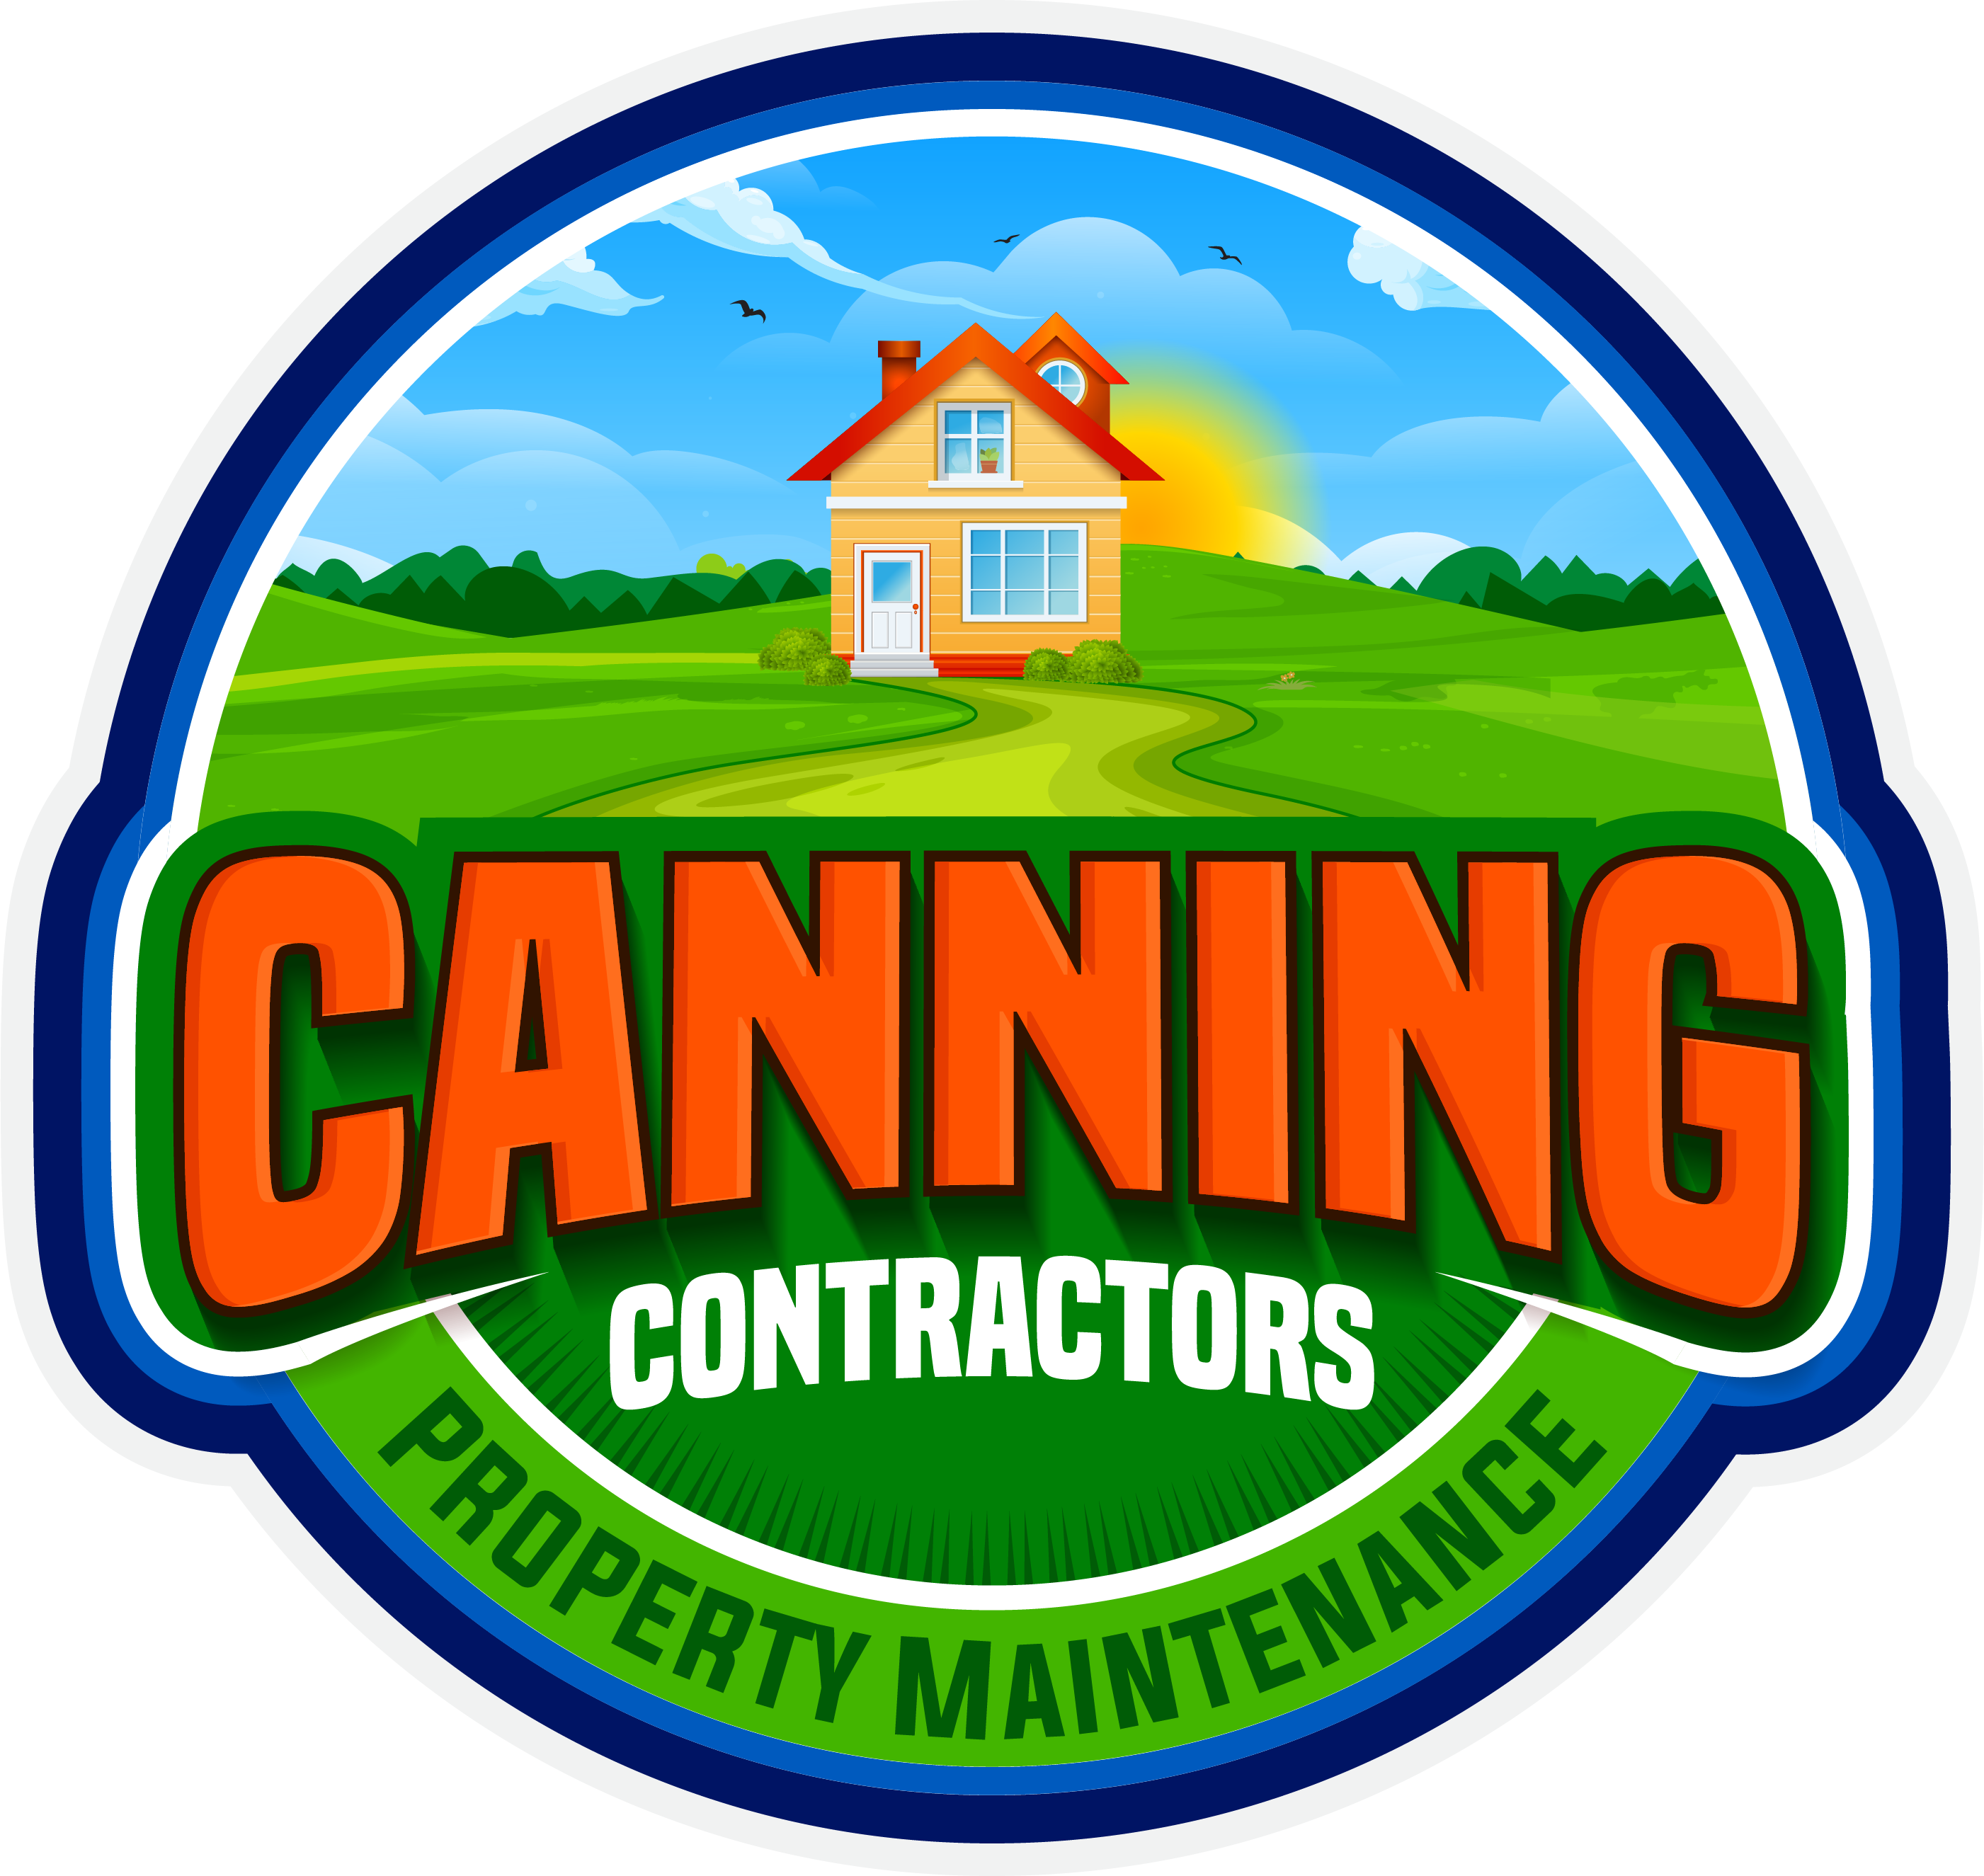 Canning Contractors